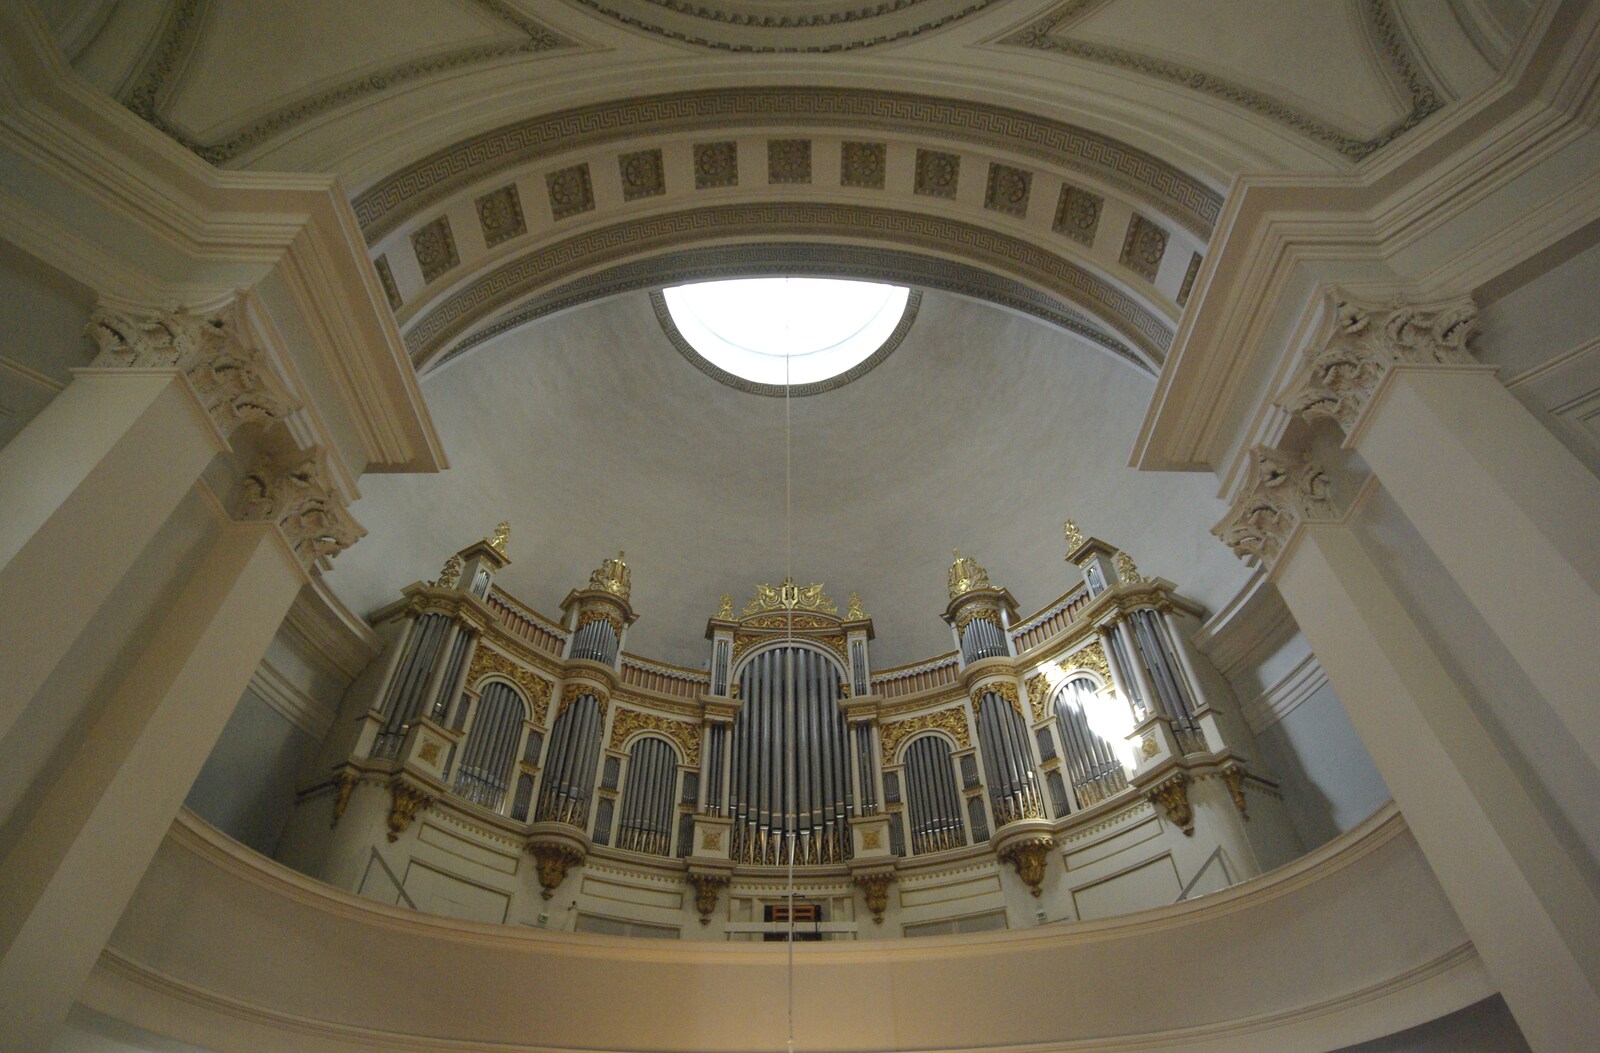 Genesis in Concert, and Suomenlinna, Helsinki, Finland - 11th June 2007: Impressive church organ